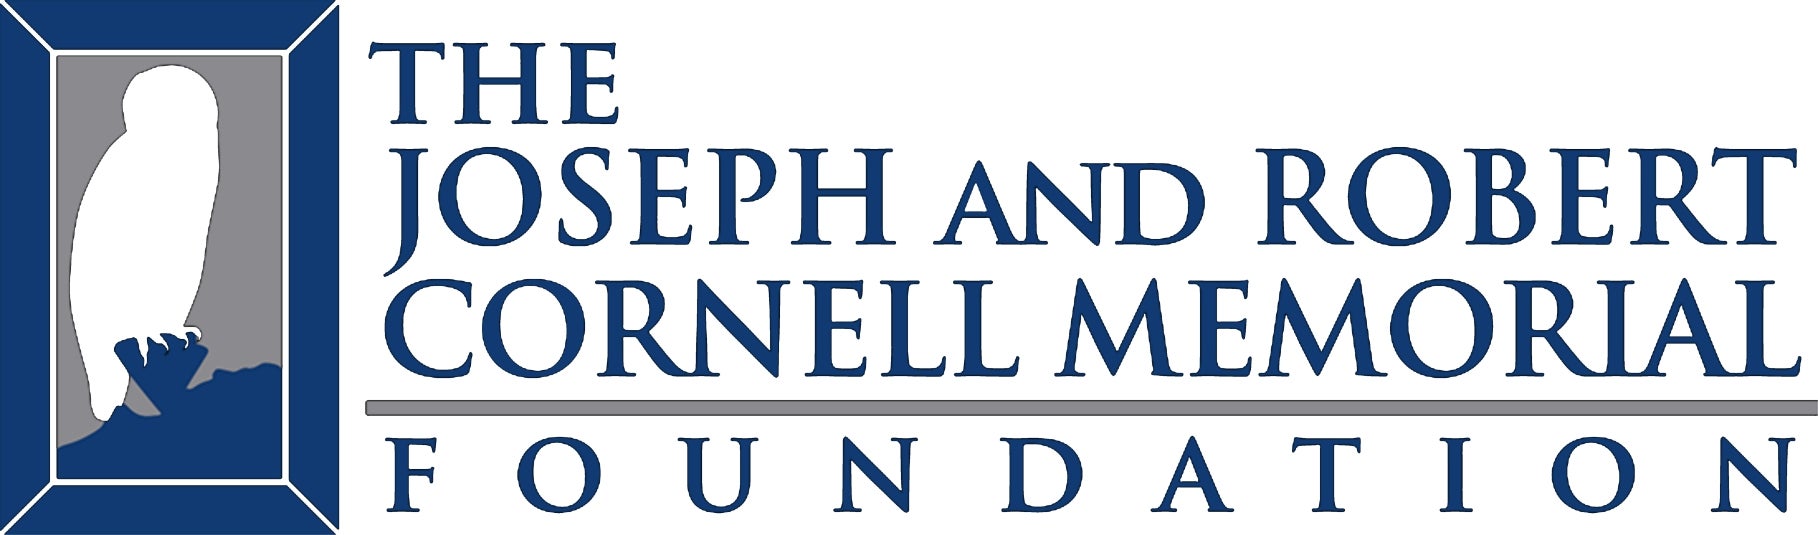 Cornell Fdn logo.jpg